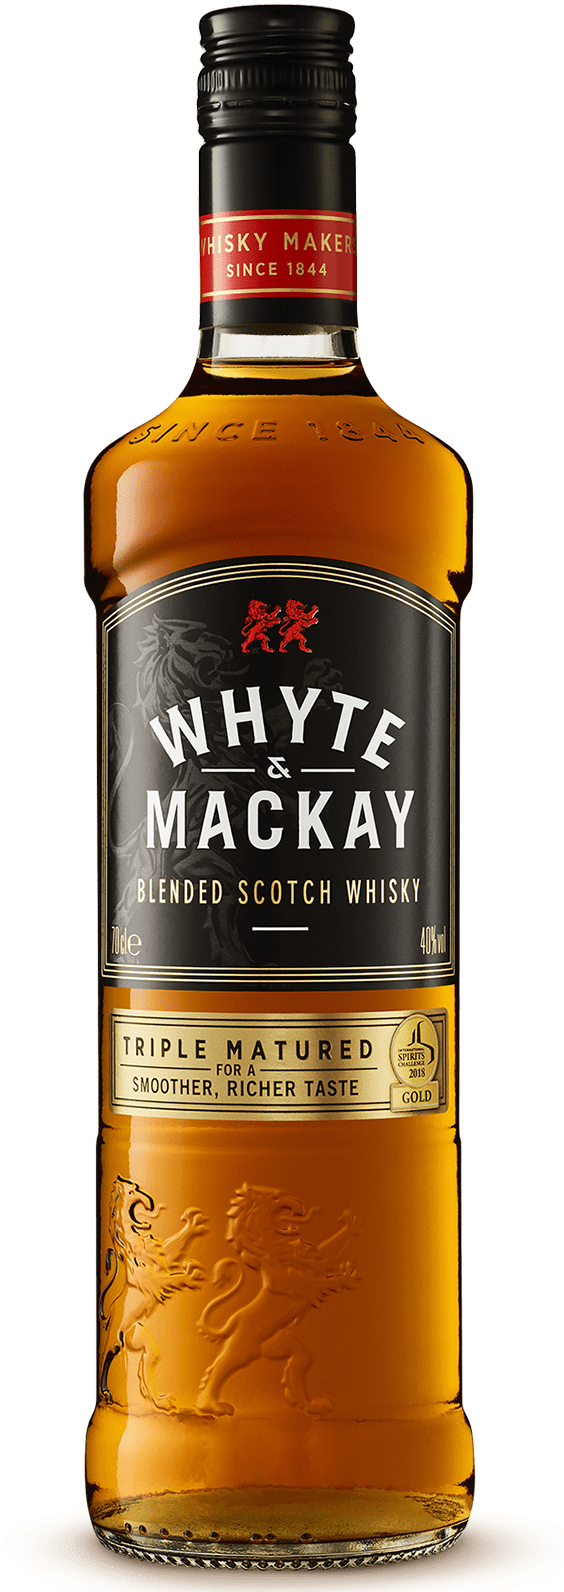 Whyte & Mackay Triple Matured